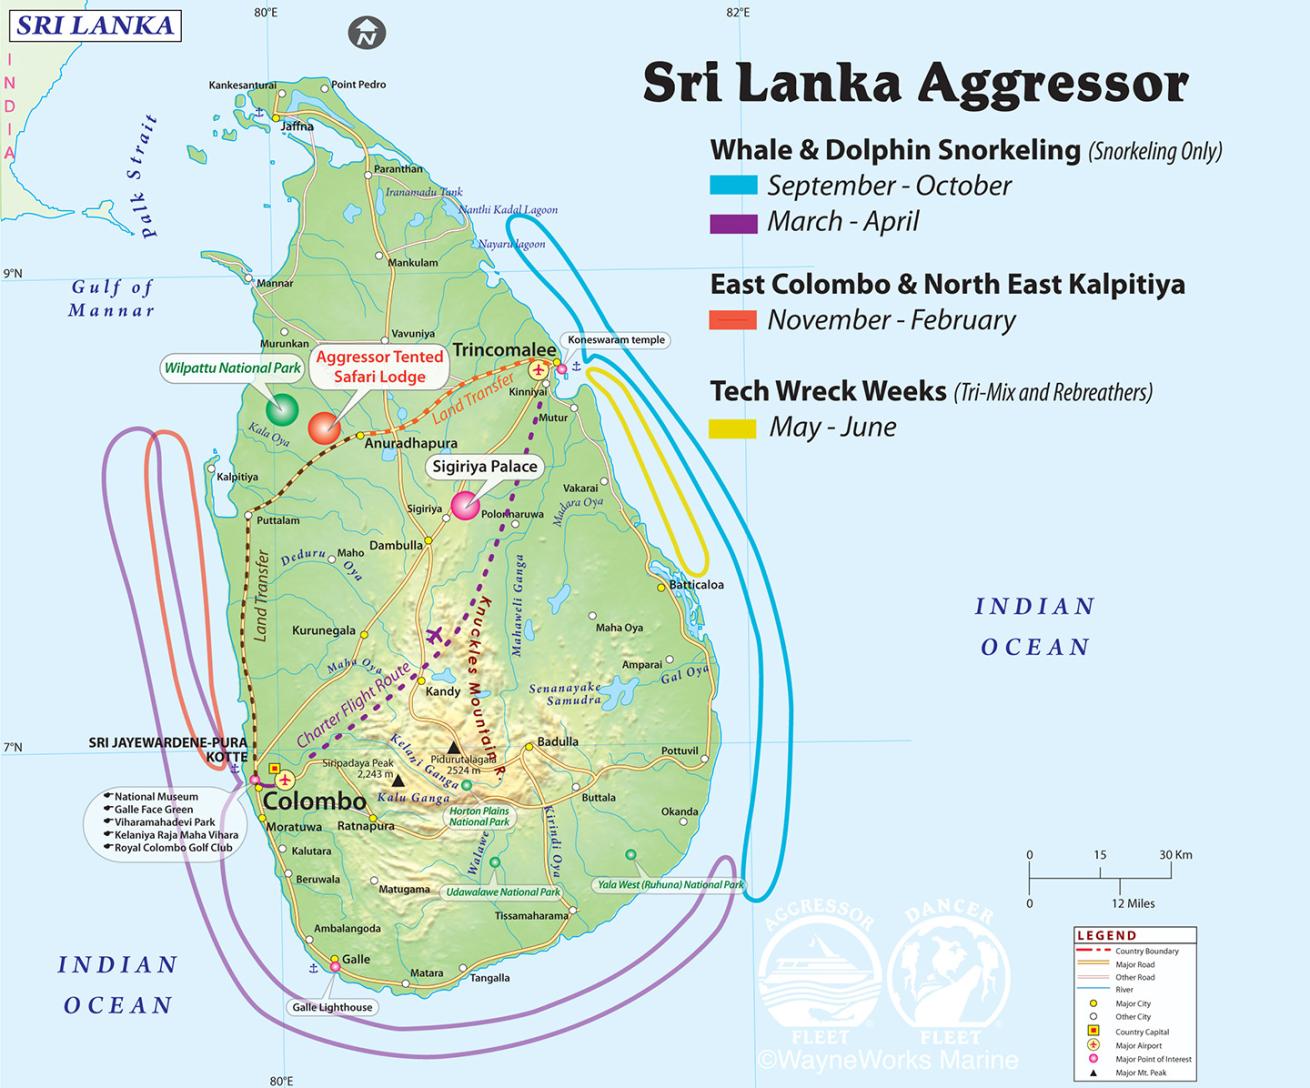 Sri Lanka Aggressor itinerary